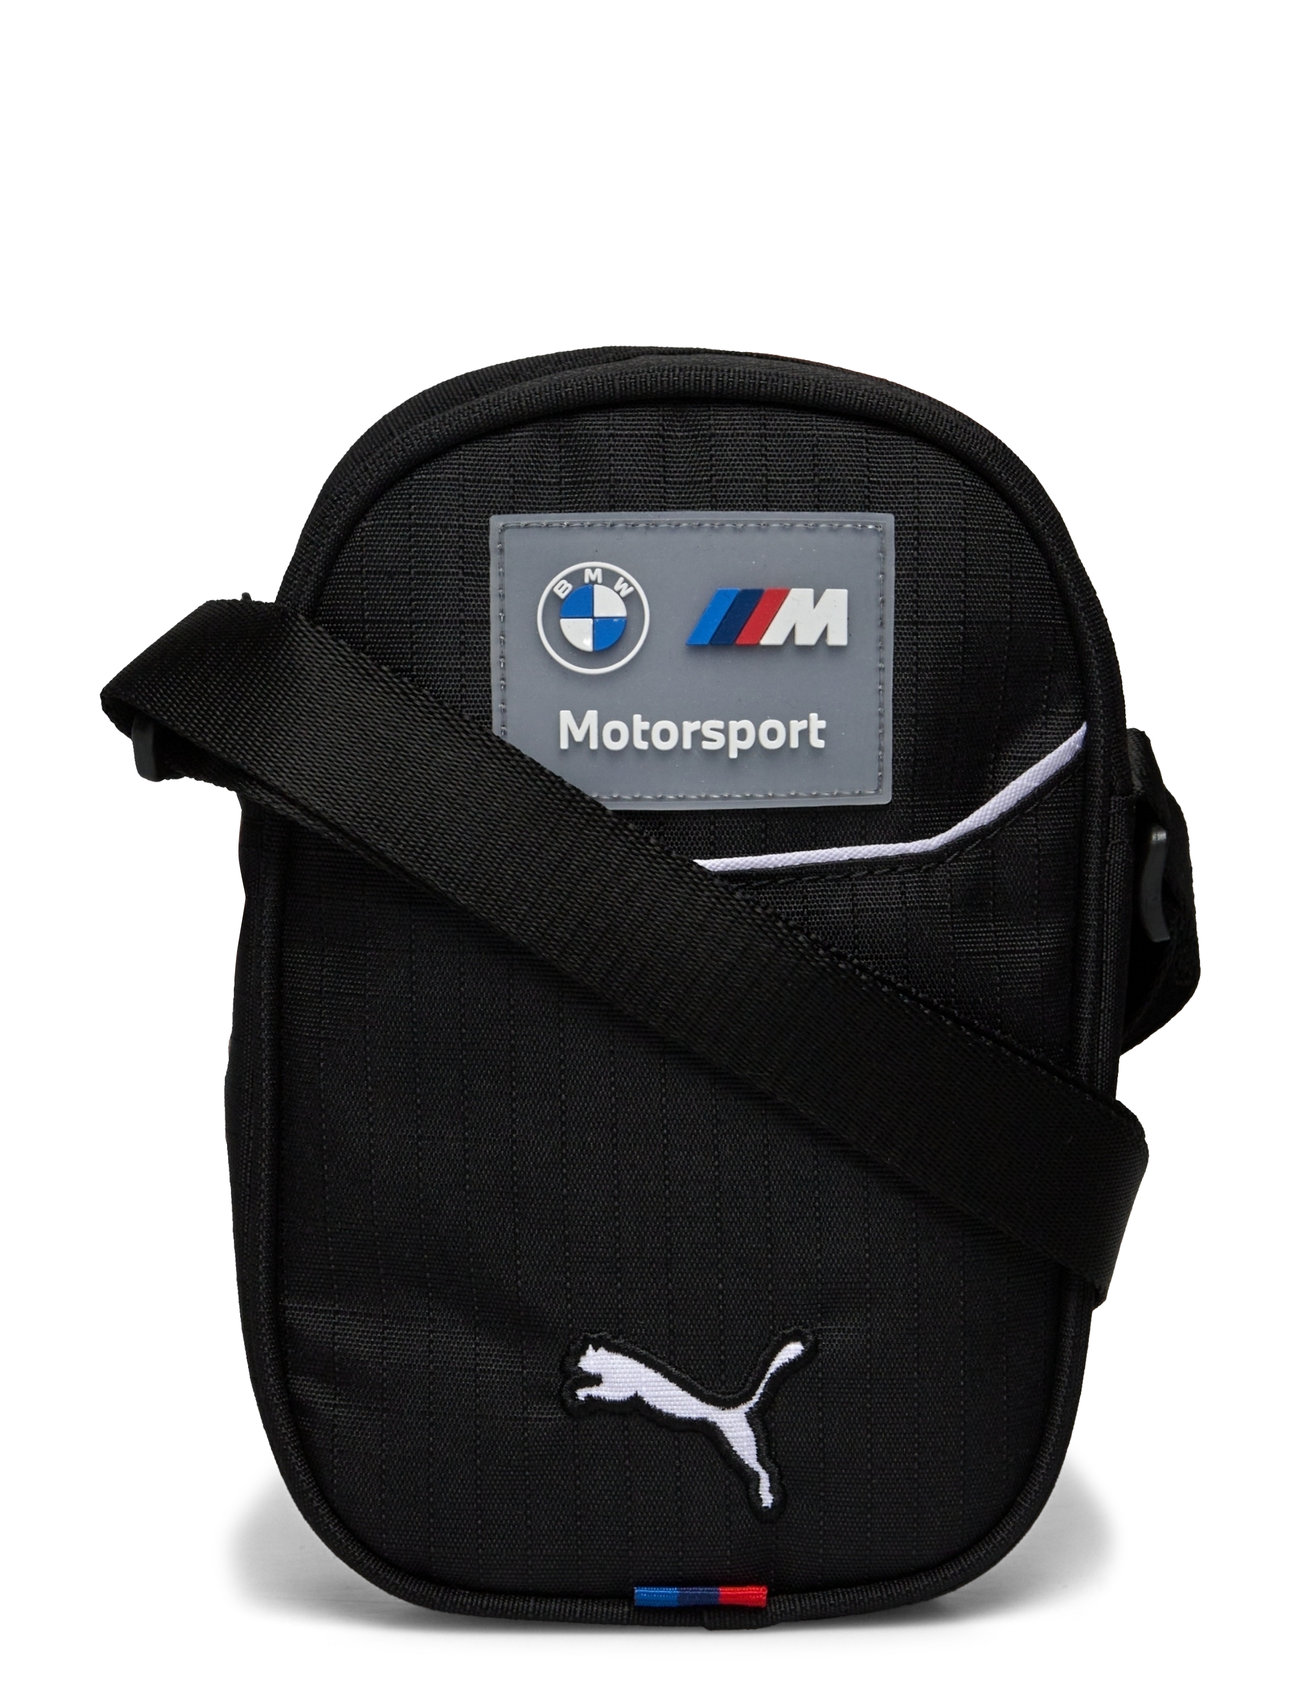 Bmw Mms Small Portable Sport Crossbody Bags Black PUMA Motorsport